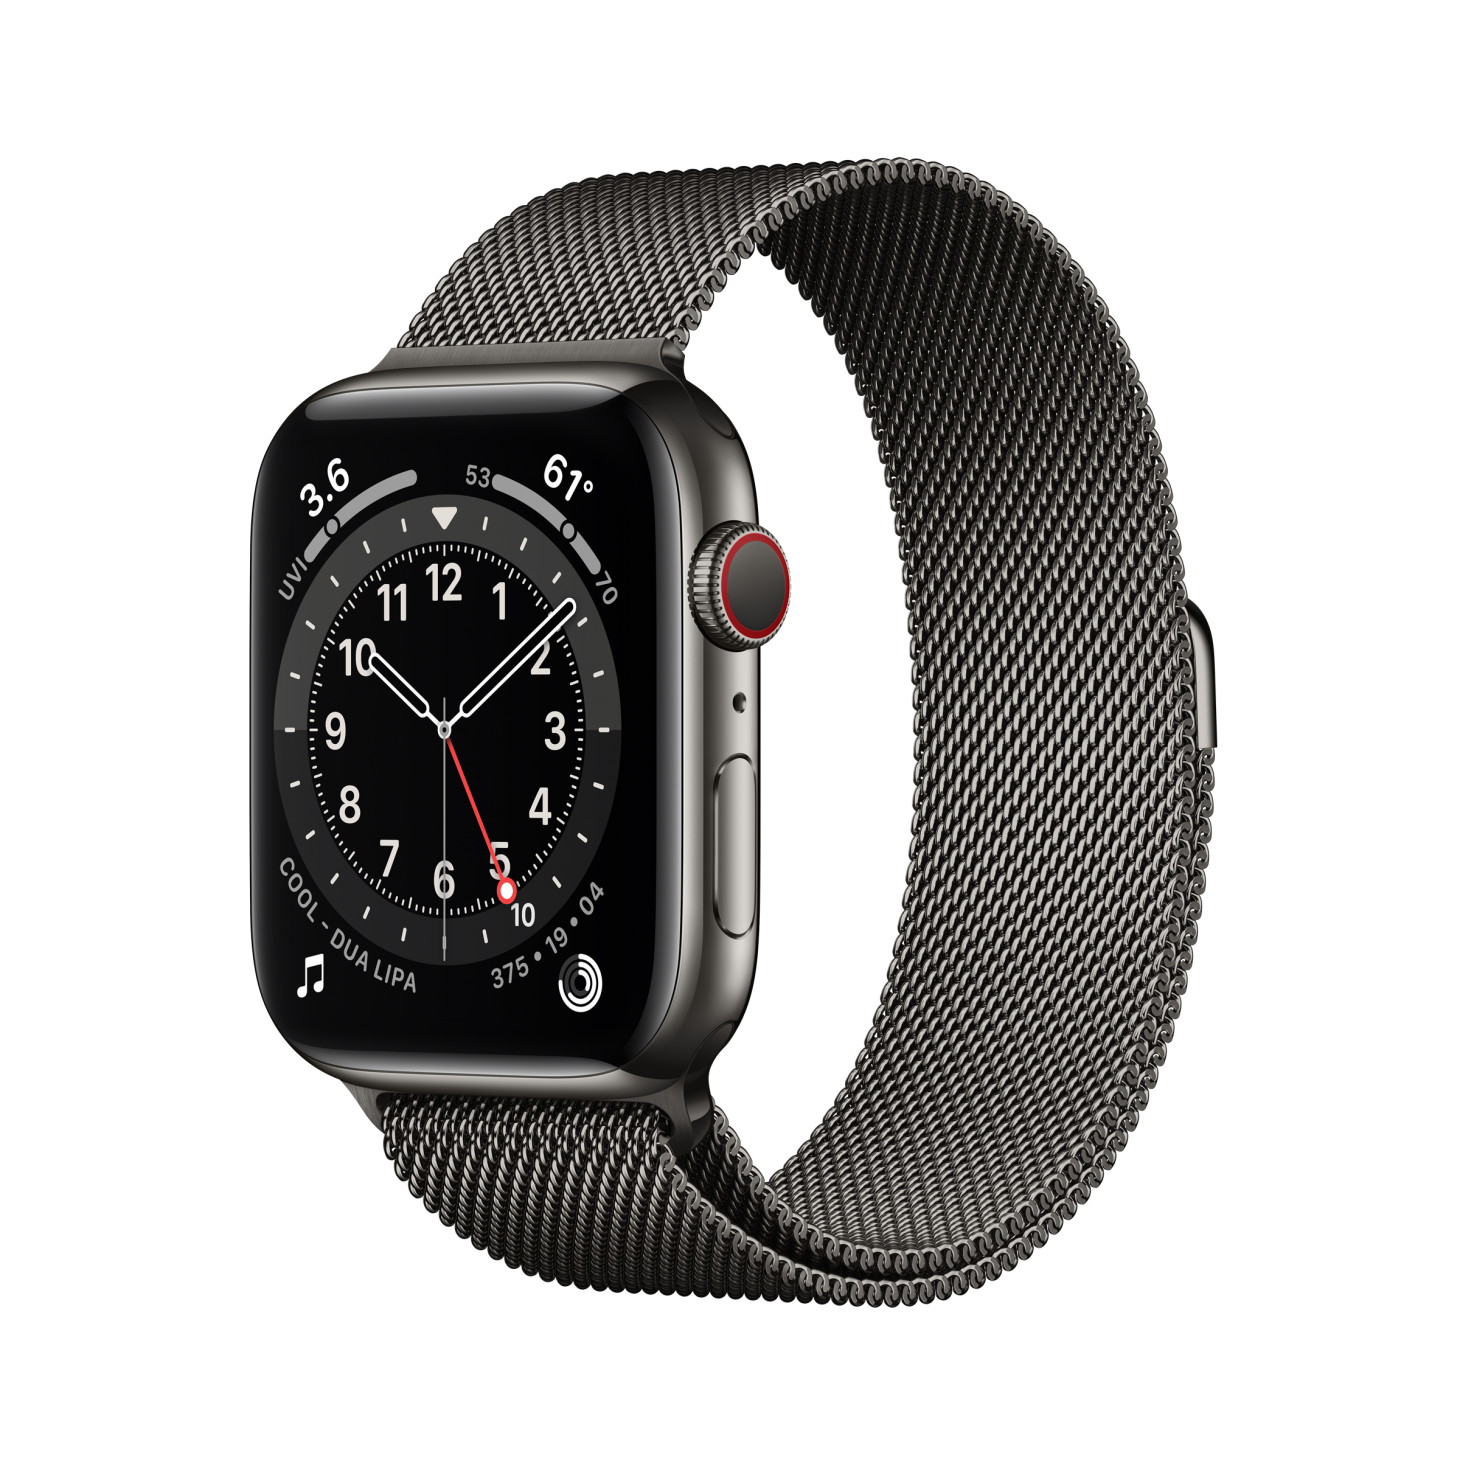 Black Apple Watch Series 5 PNG Transparant Beeld